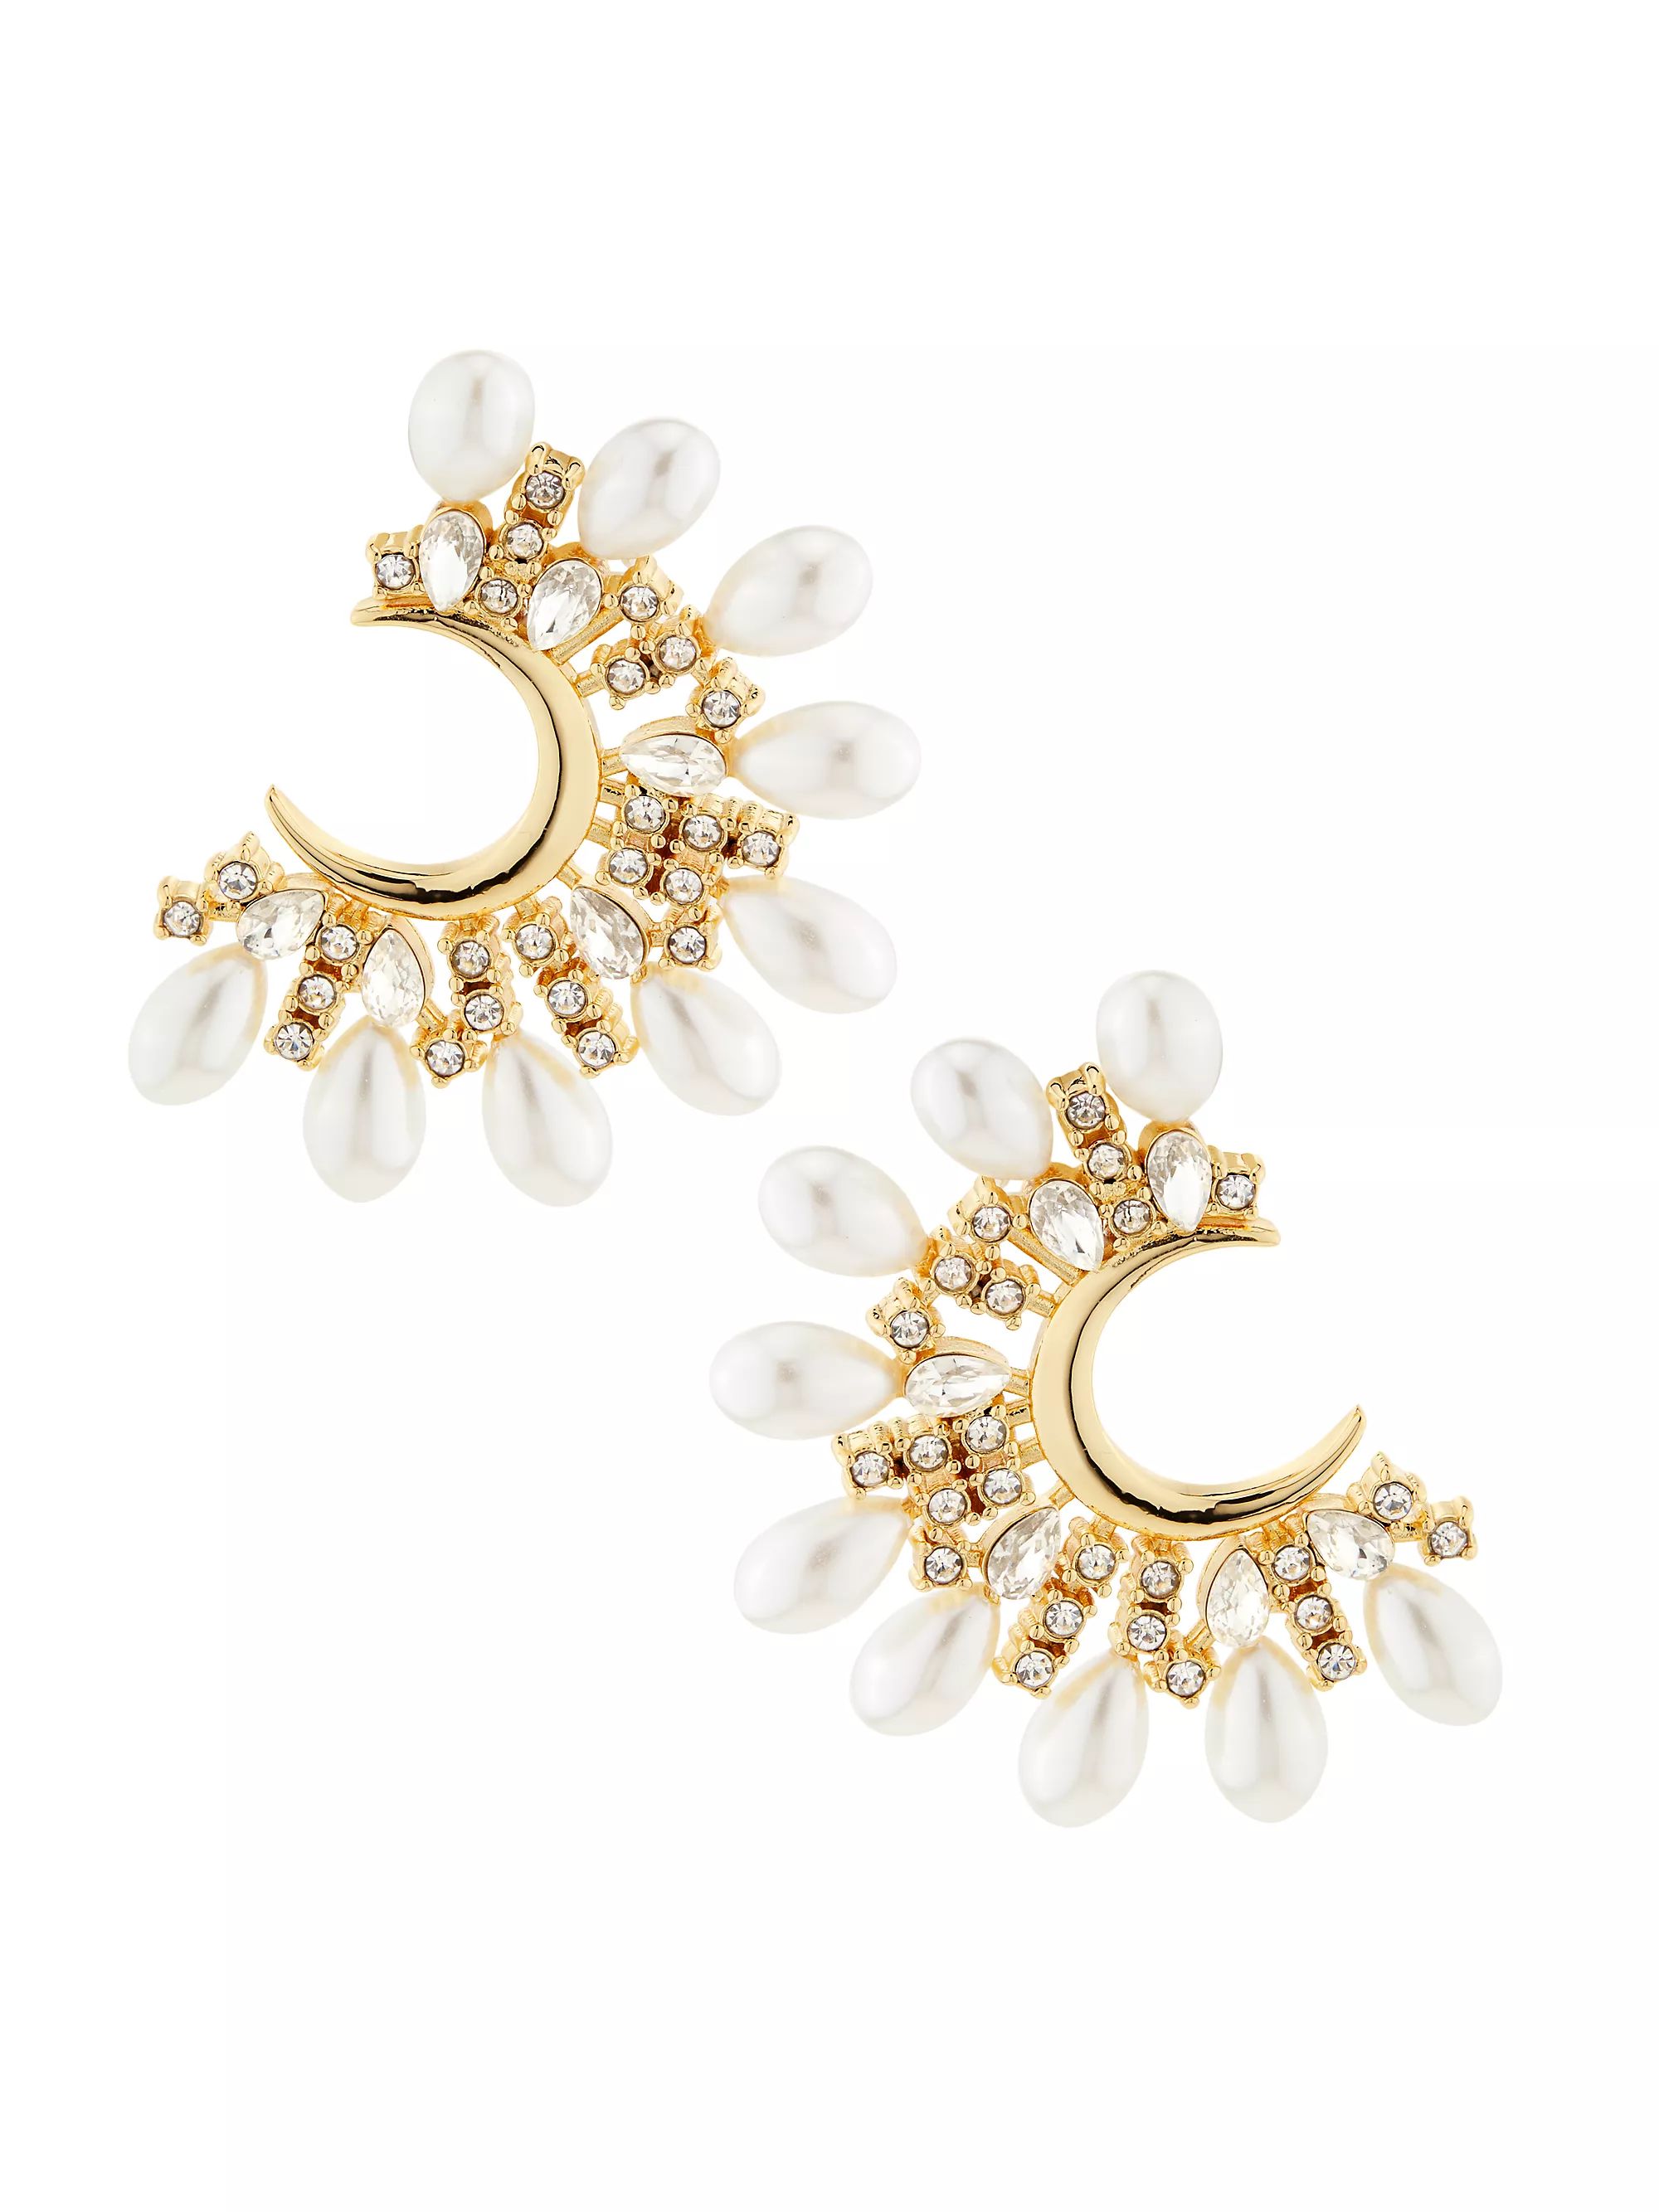 Goldtone, Imitation Pearl & Crystal C-Shaped Earrings | Saks Fifth Avenue